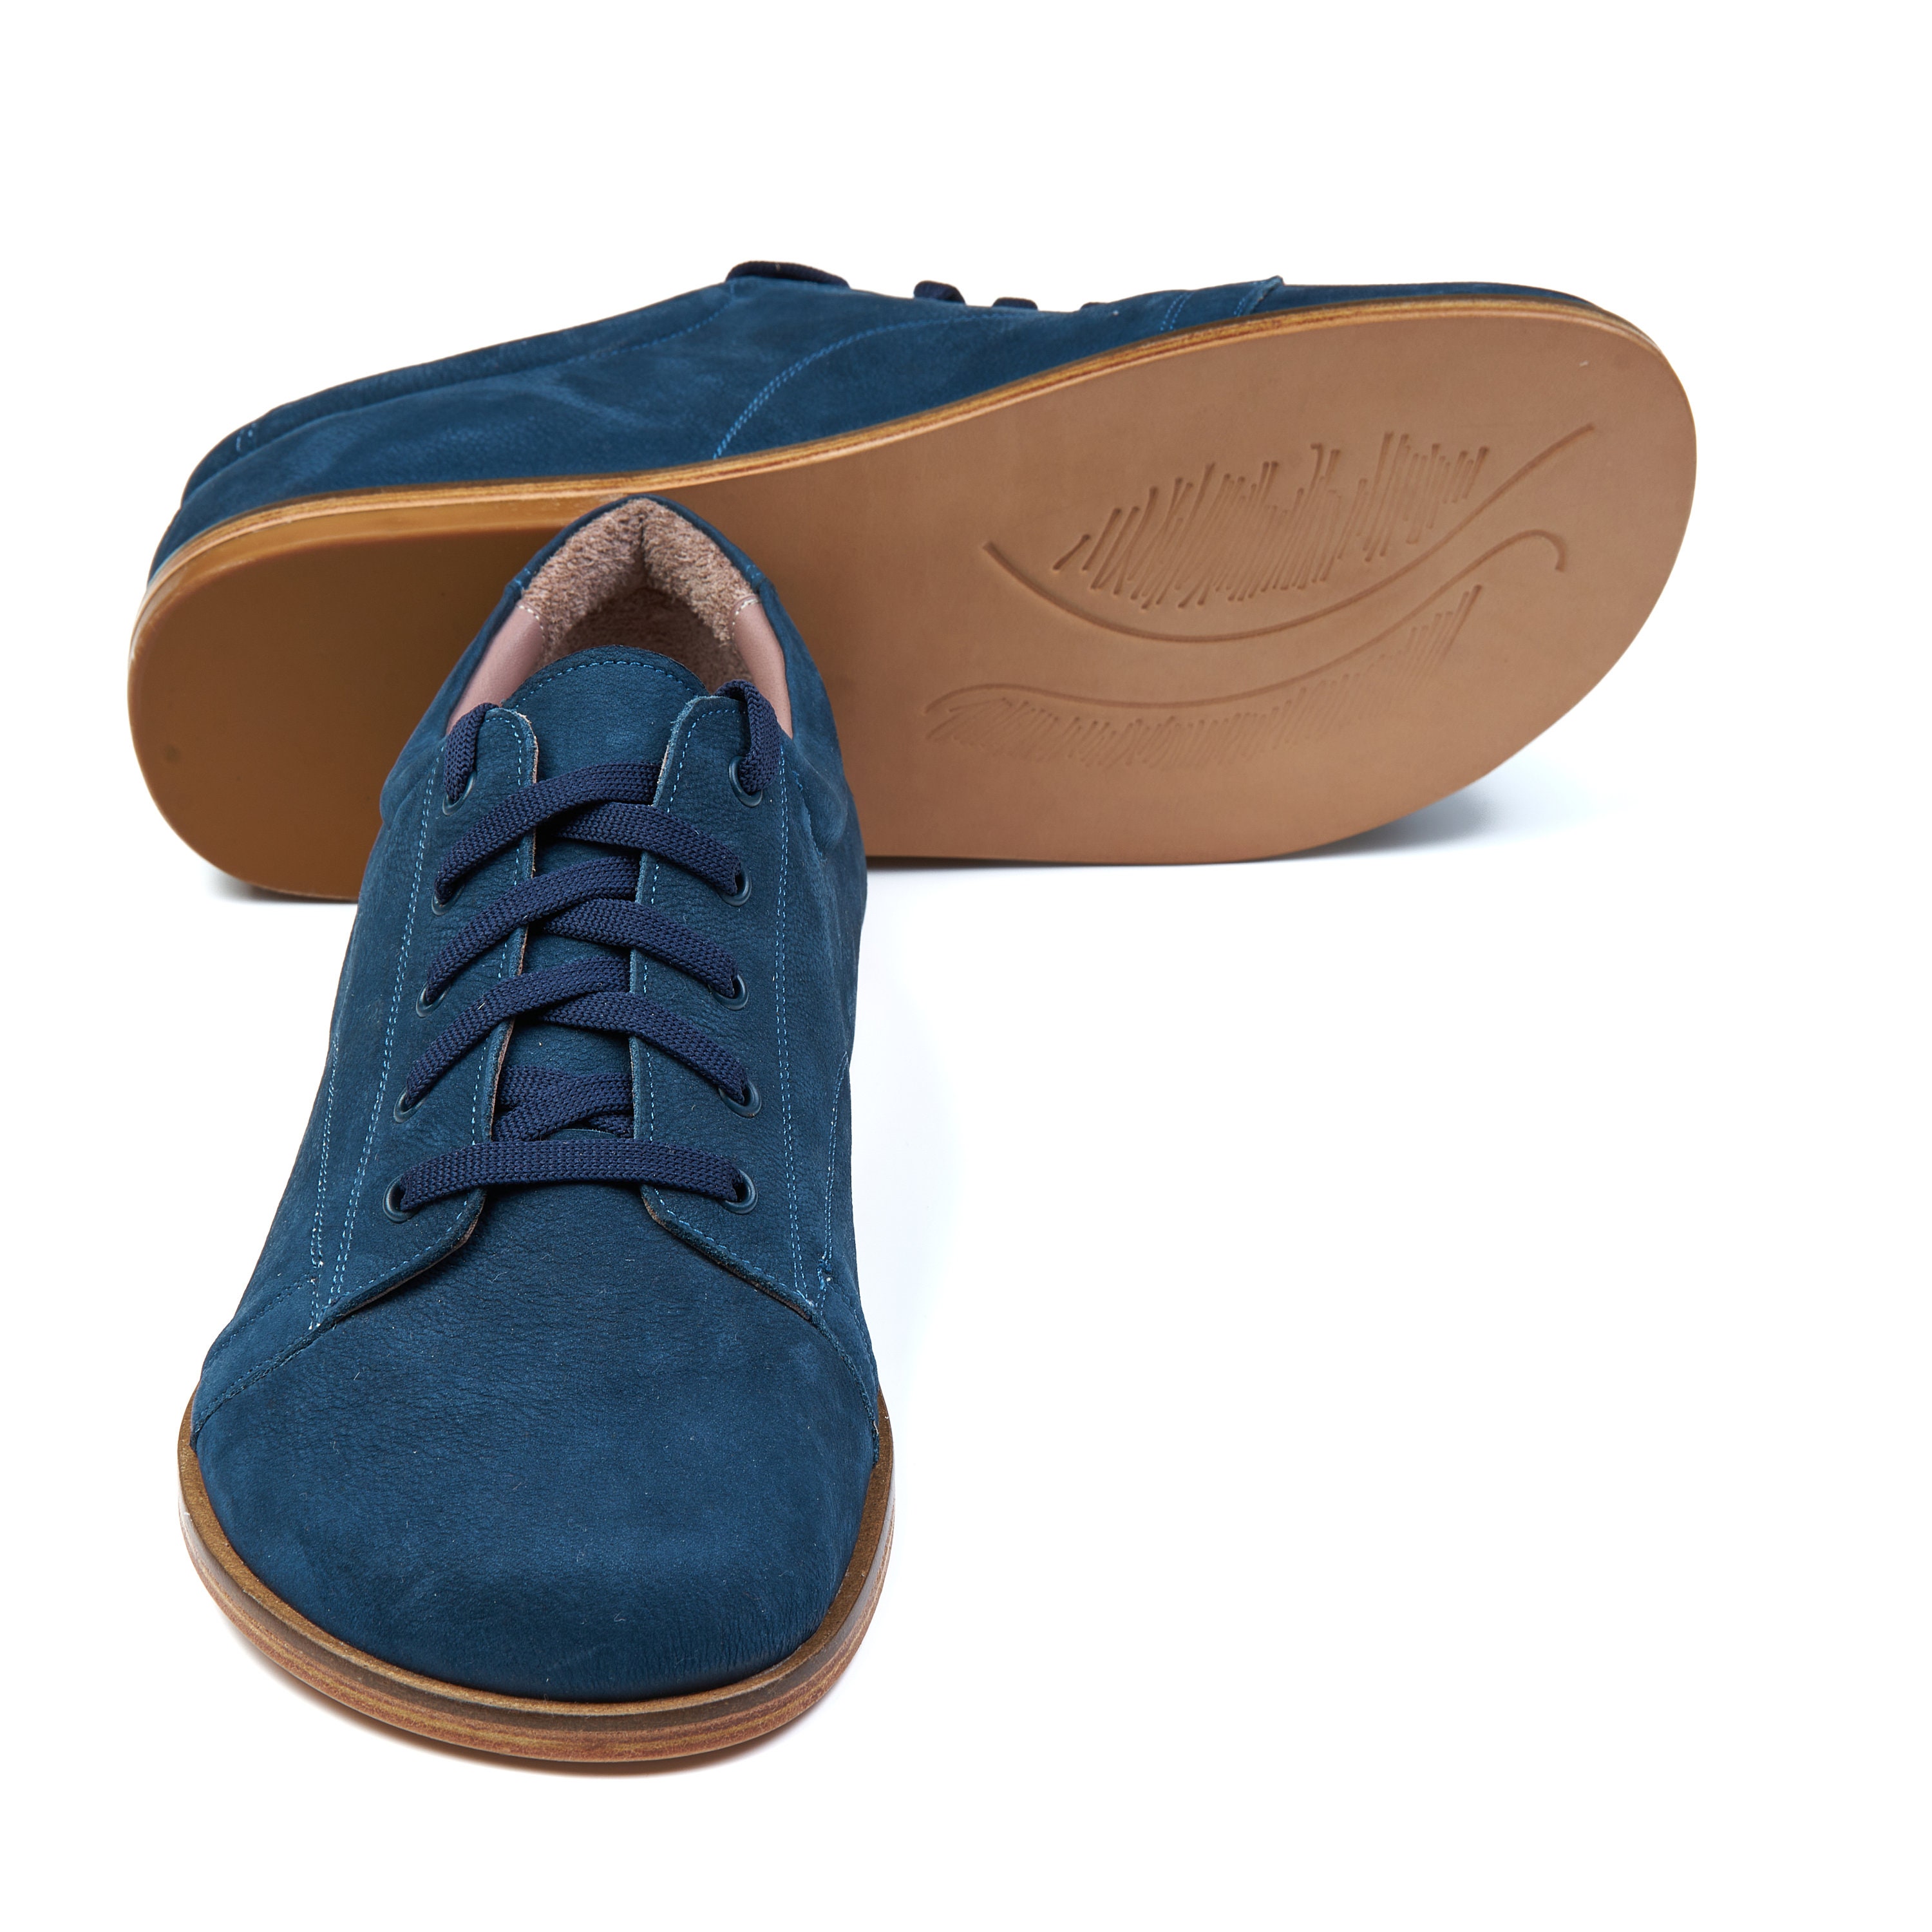 New Balance | Shoes | New Balance 52 Wl520an Blue Purple Suede Sneakers  Retro Tennis Shoes Womens 9 | Poshmark